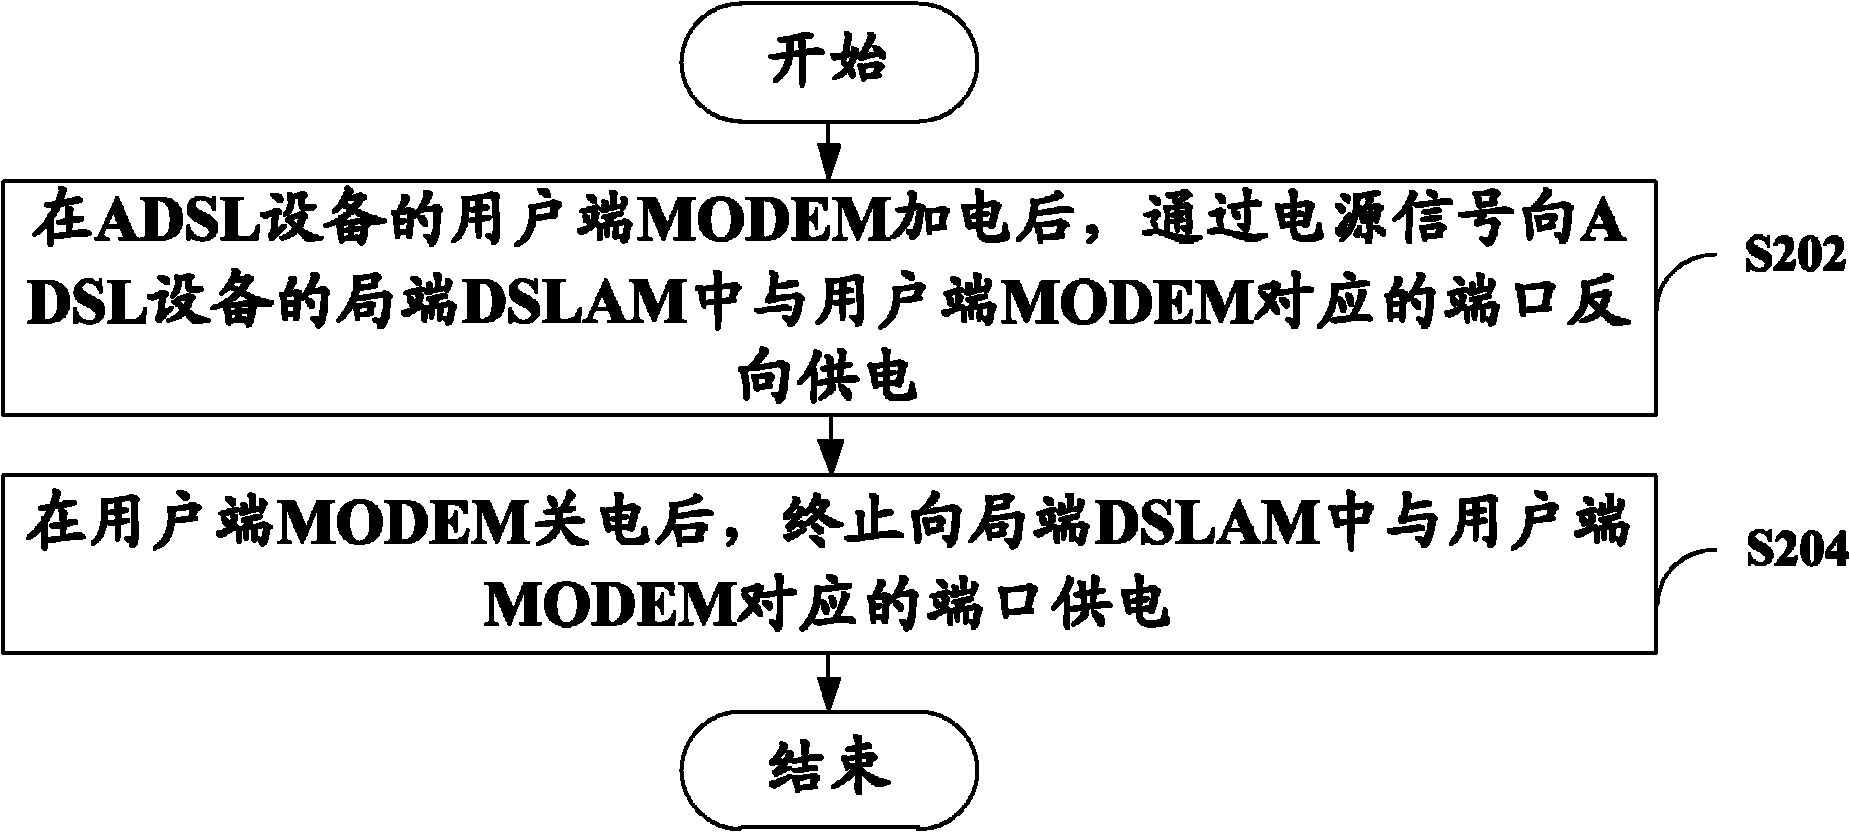 MODEM, DSLAM (Digital Subscriber Line Access Multiplexer), ADSL (Asymmetrical Digital Subscriber Loop) equipment and communication method thereof